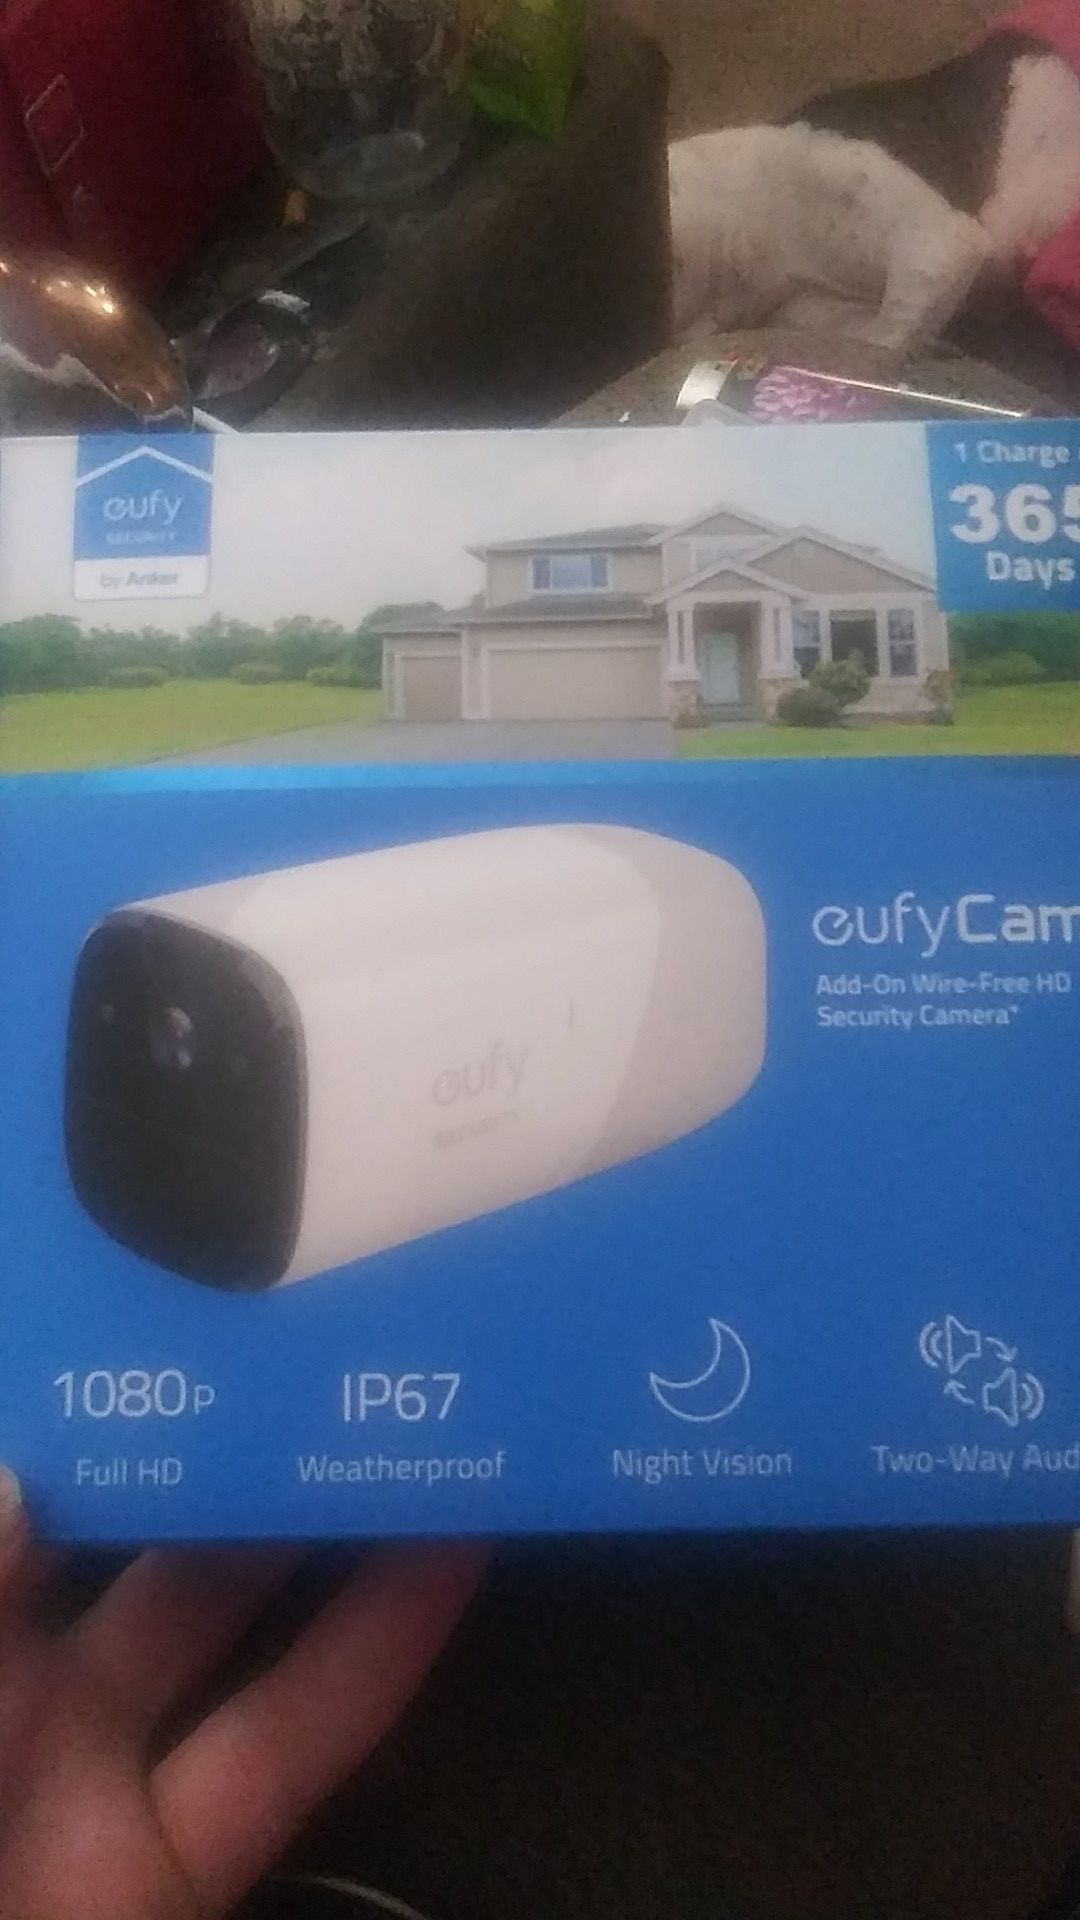 Eufy cam add on wire free hd security camera